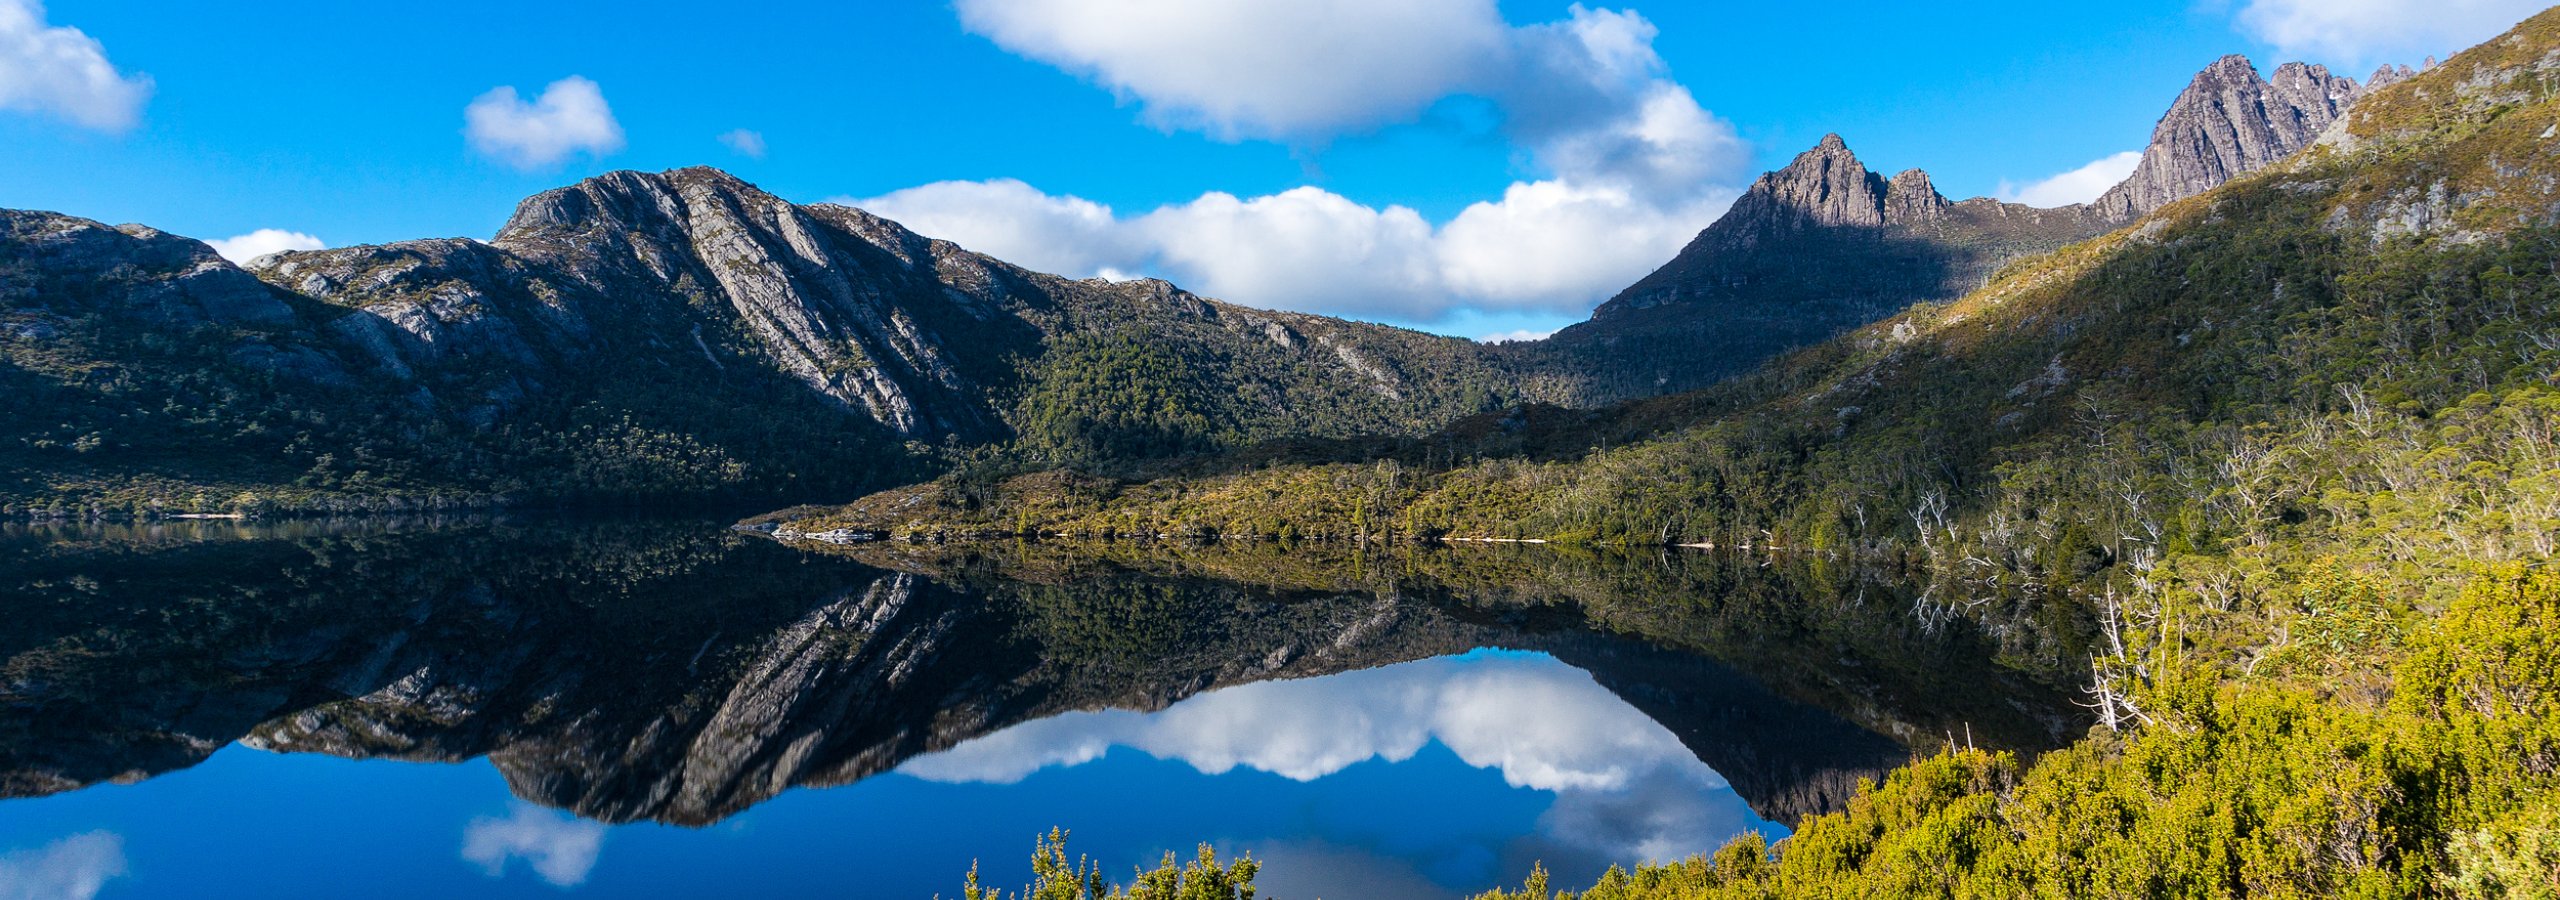 Tasmania Incredible National Parks and Turbulent History